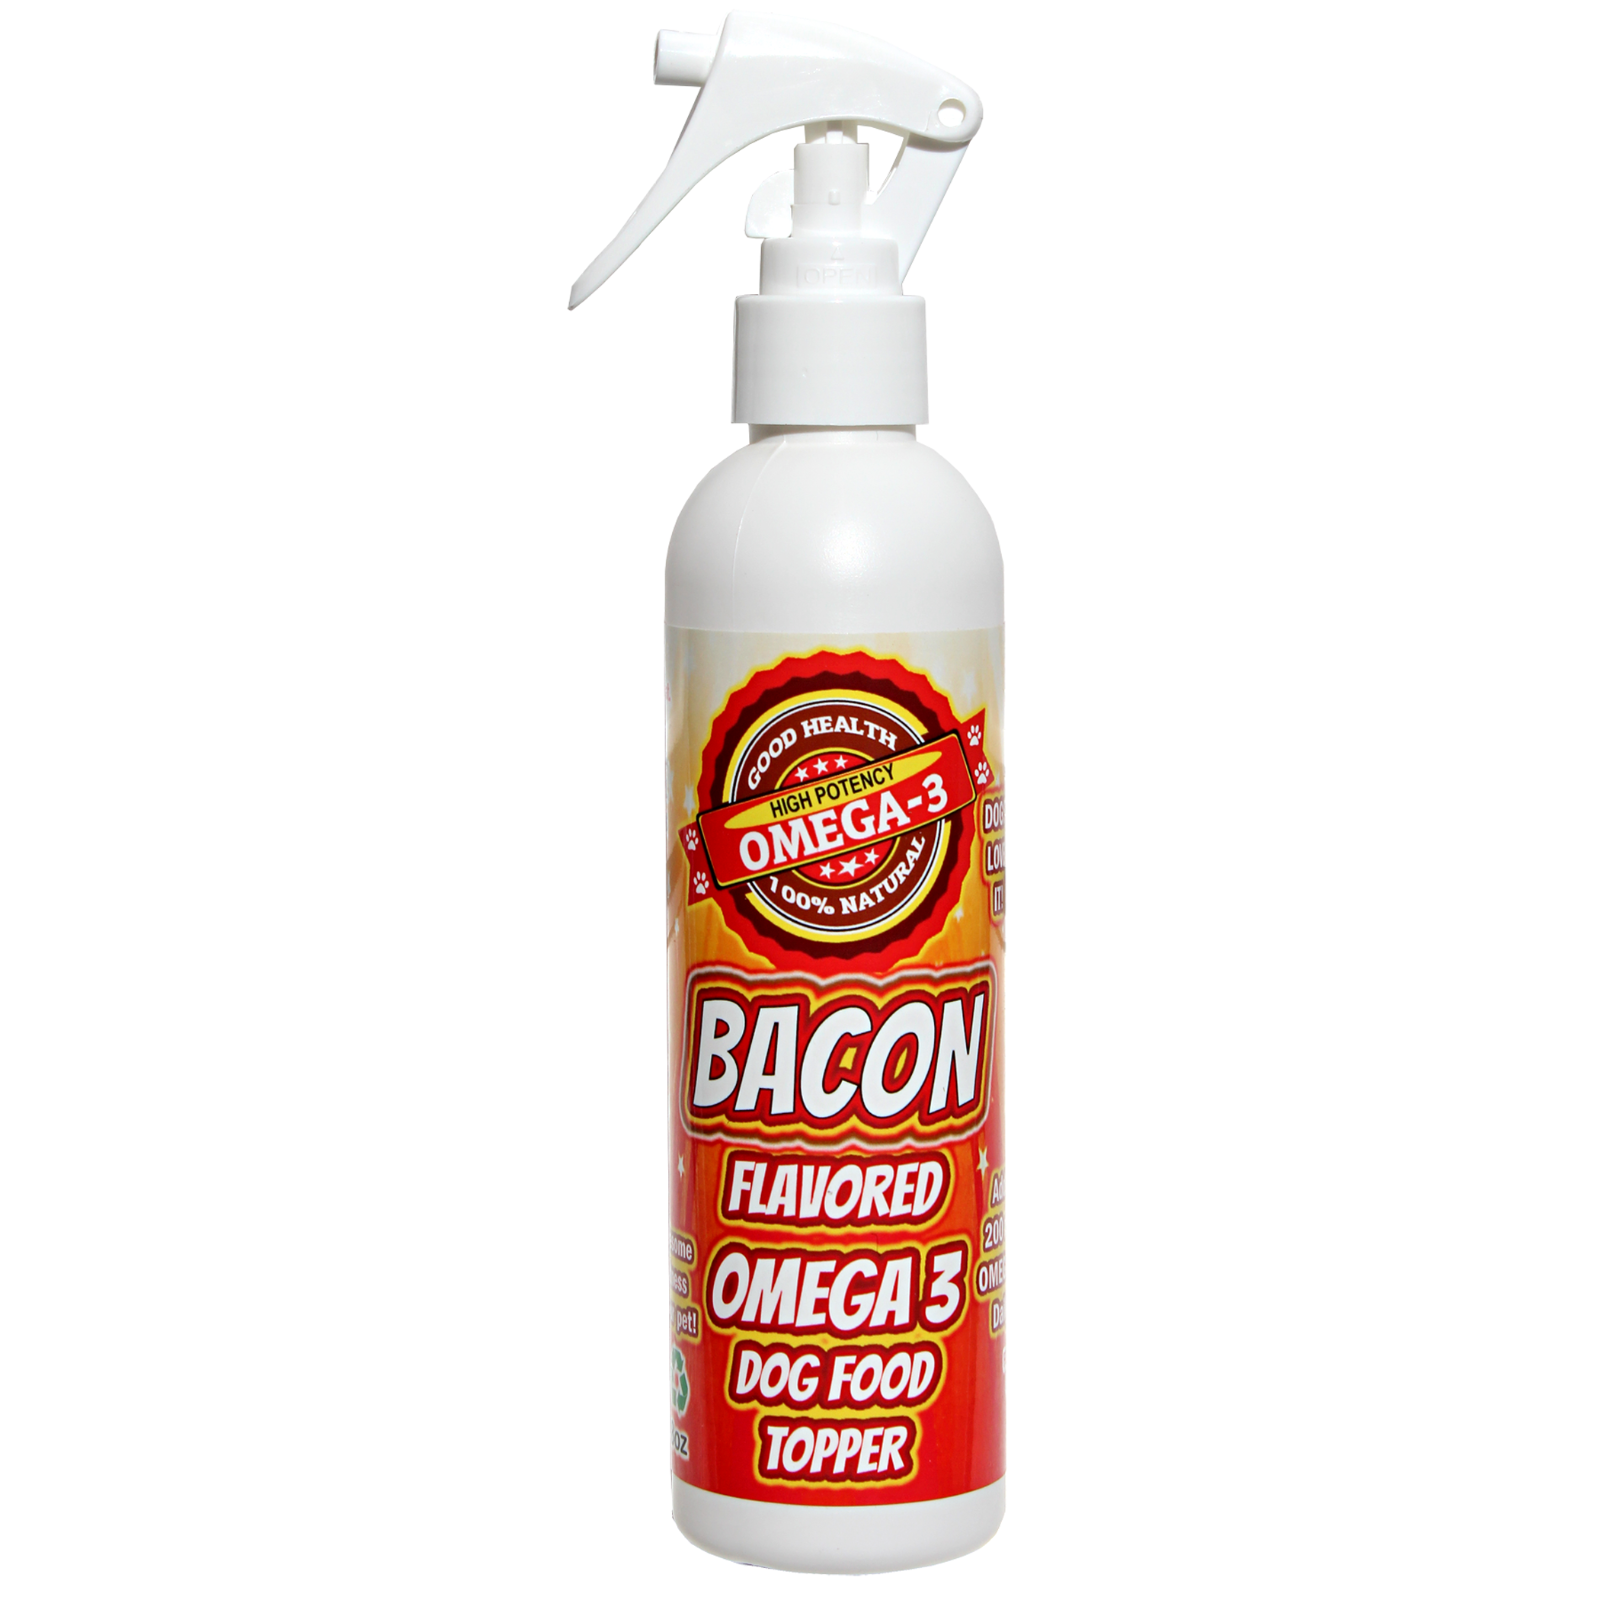 Bacon Flavored Omega 3 Dog Food Spray